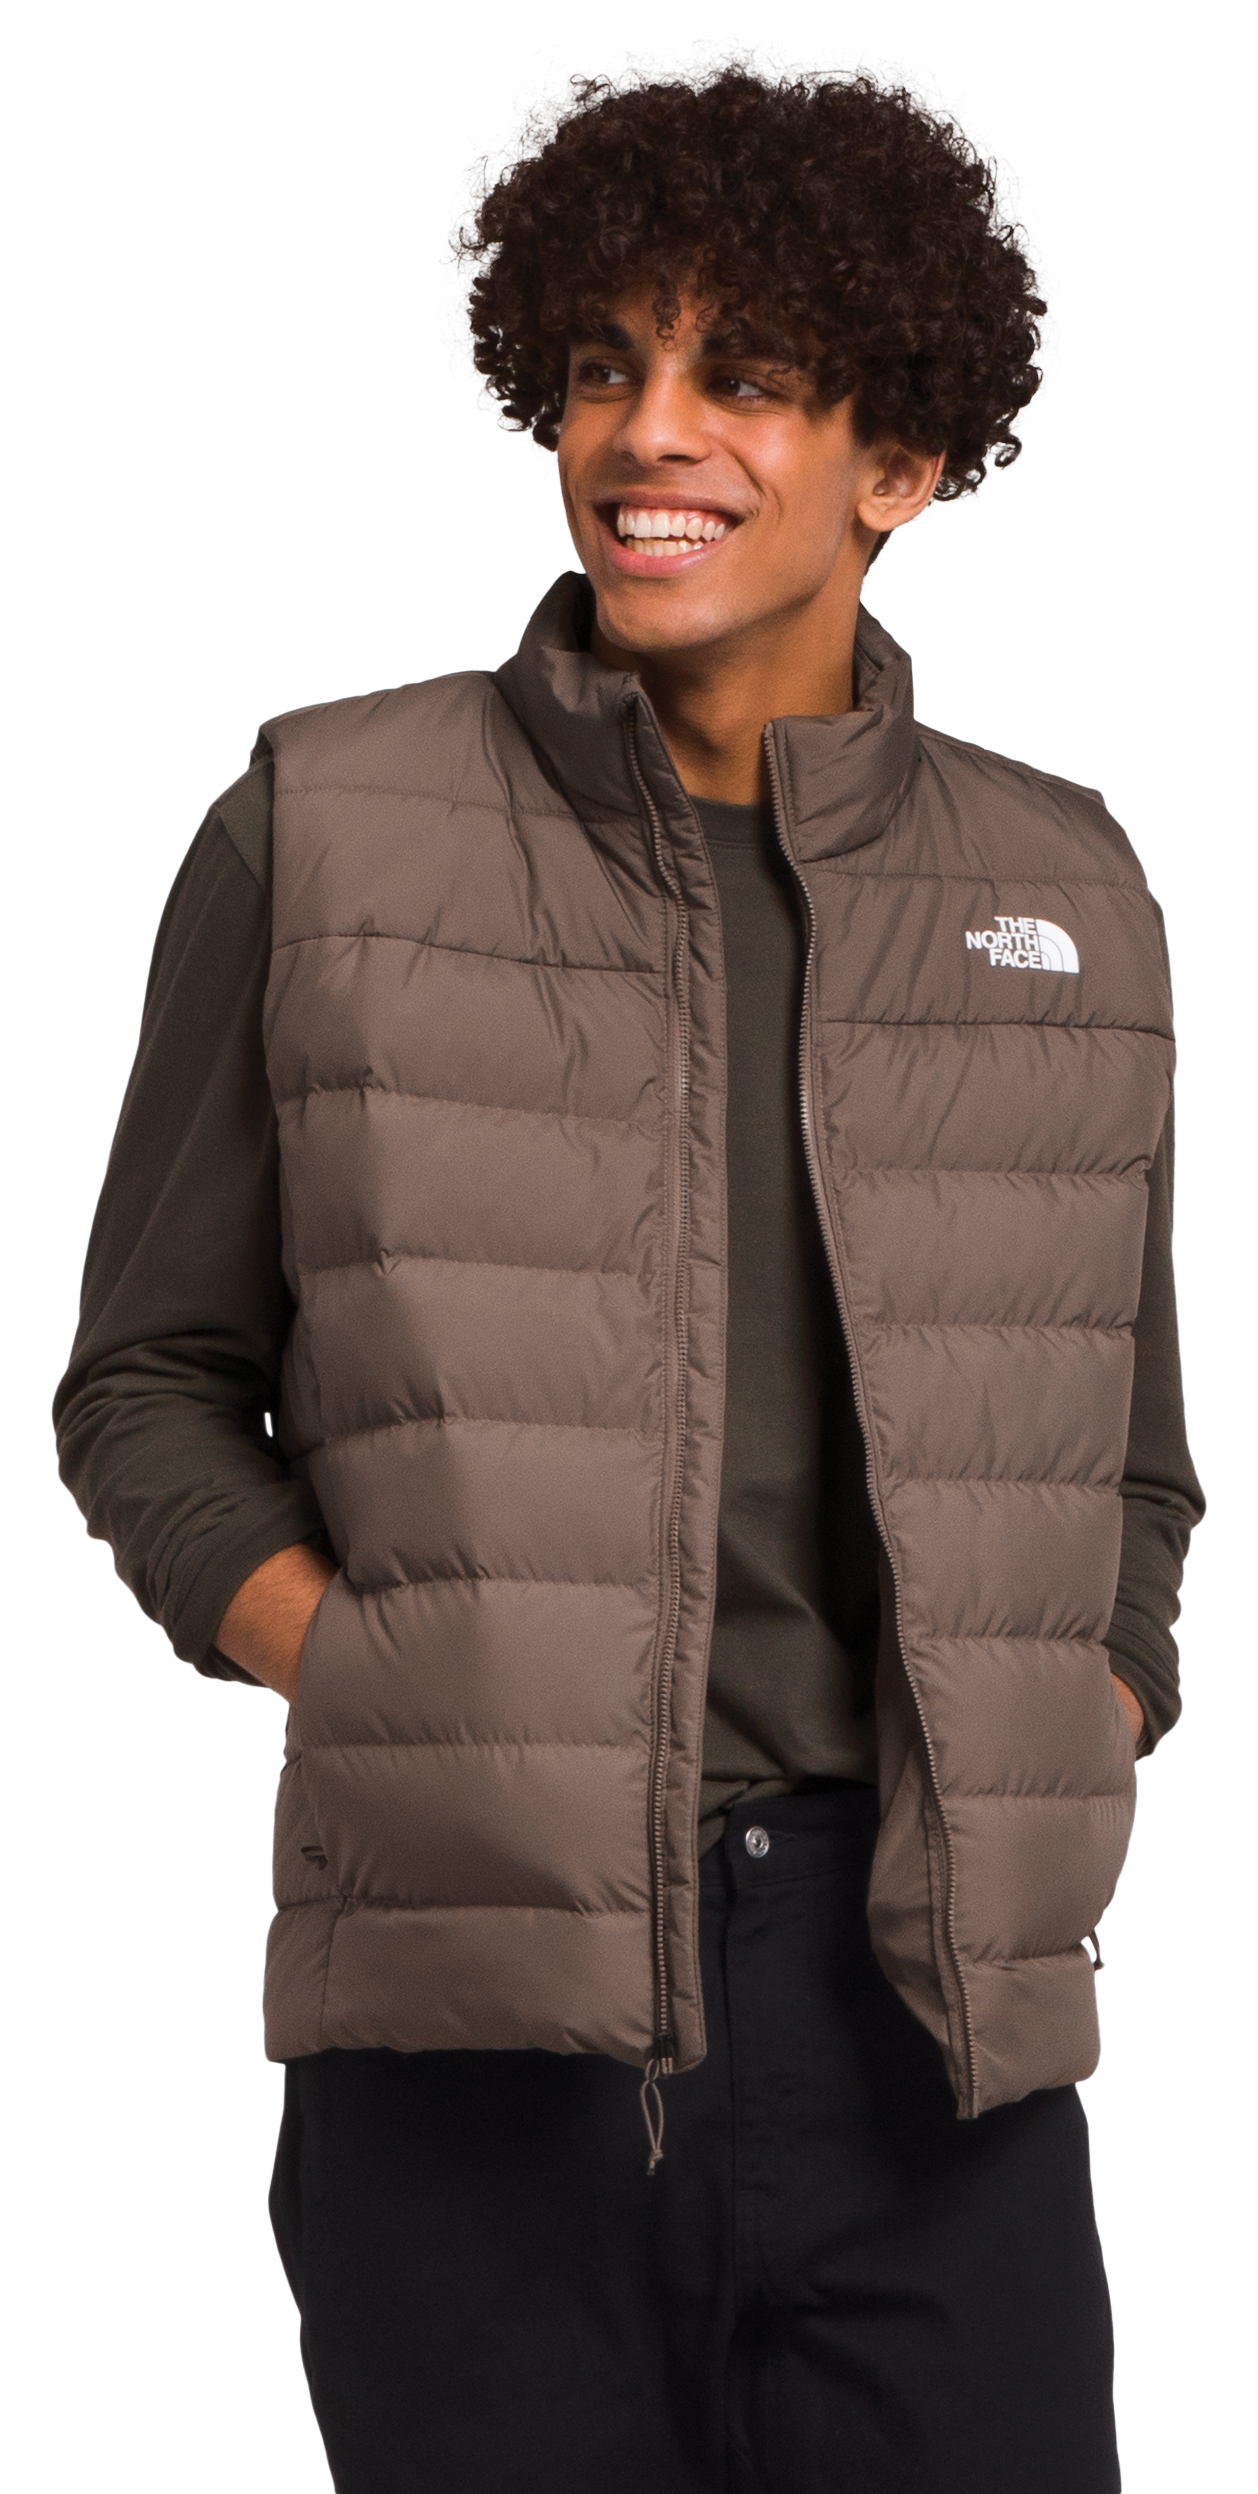 The North Face Aconcagua 3 Vest for Men - Falcon Brown - XL